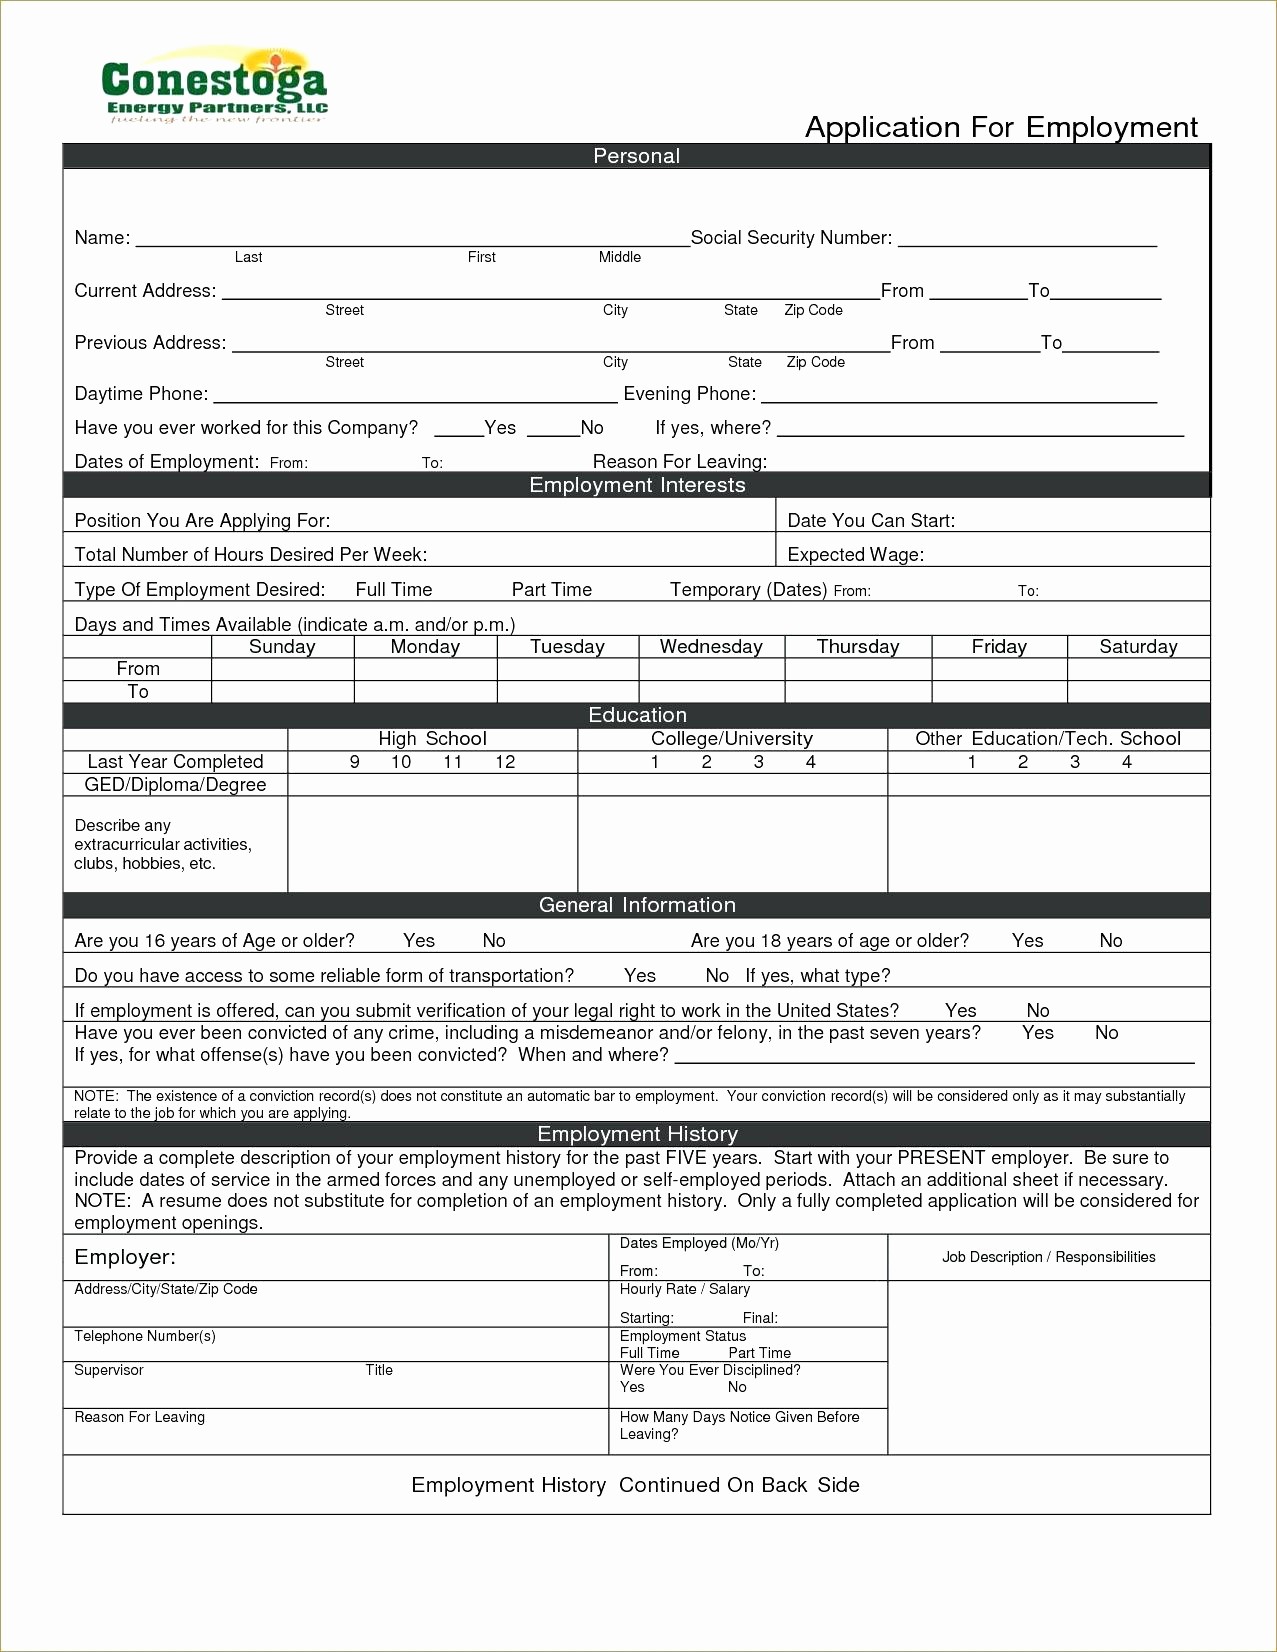 Homeowners Insurance Application Form Elegant Document